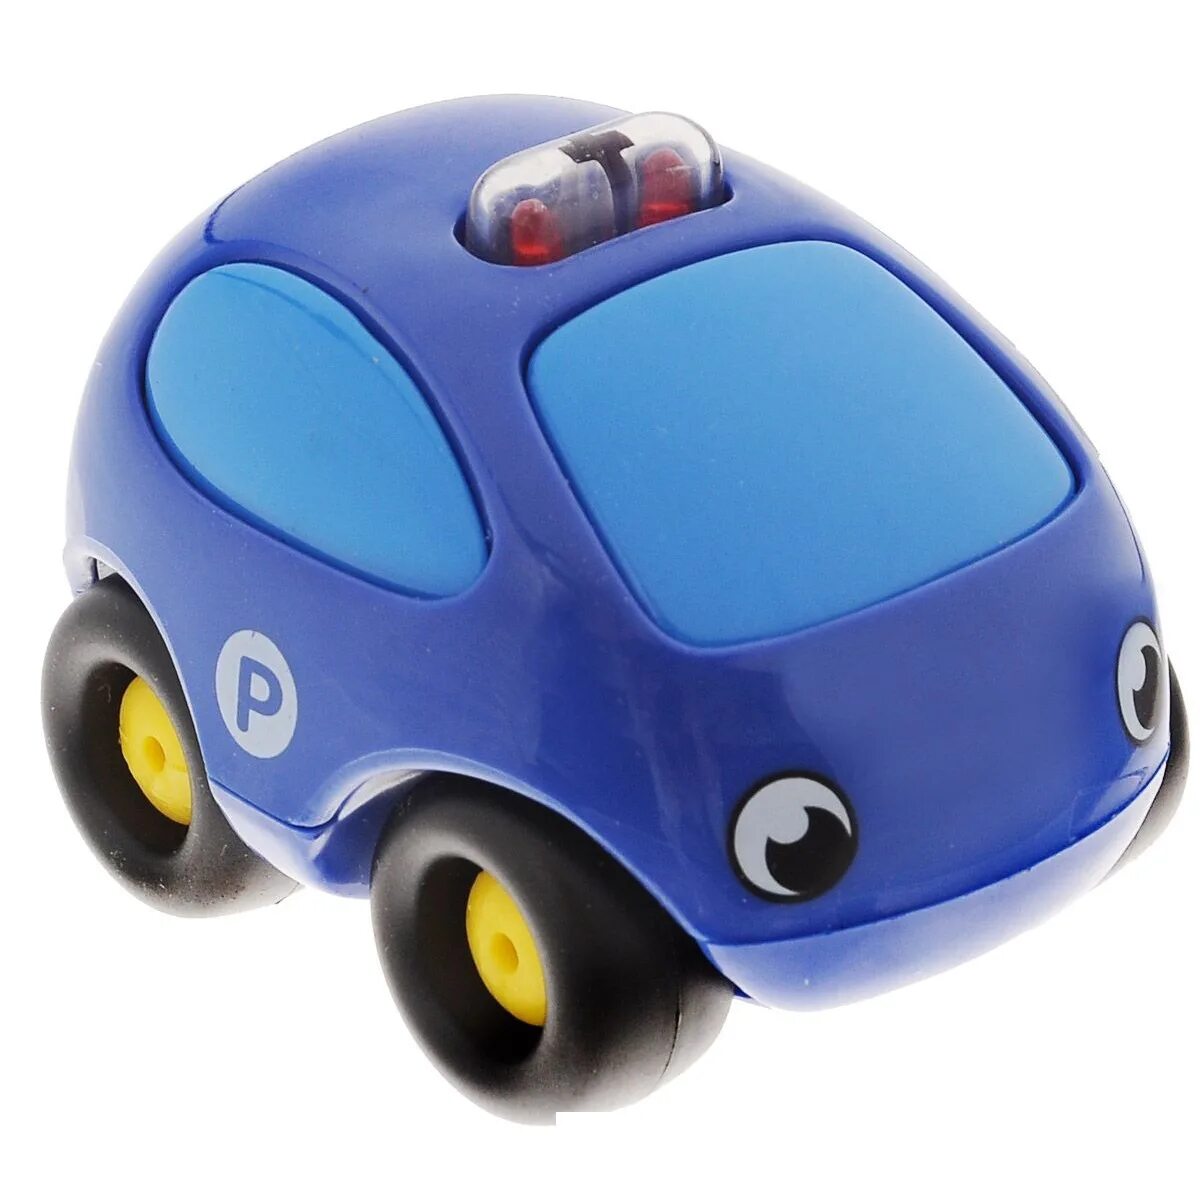 Машинки Smoby Vroom Planet. Vroom Planet мини-машинки. Машинка синяя. Синяя игрушечная машинка.